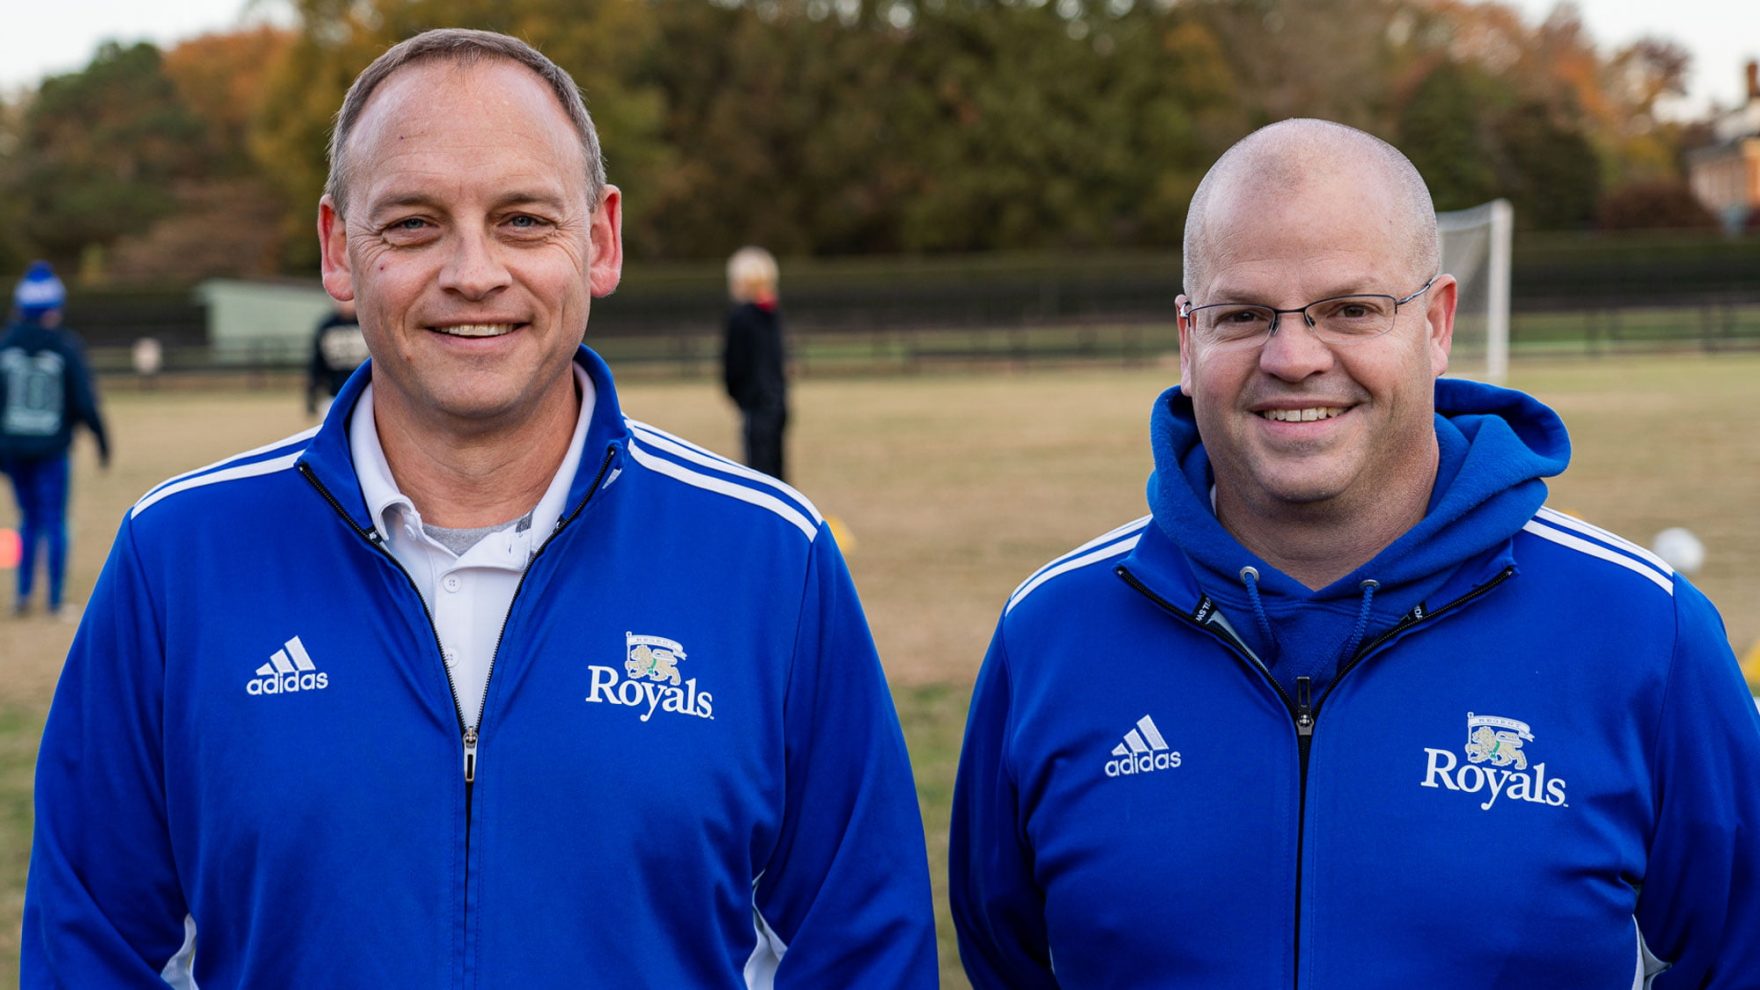 Regent soccer coaches Benjamin Brayshaw and Michael Mannix